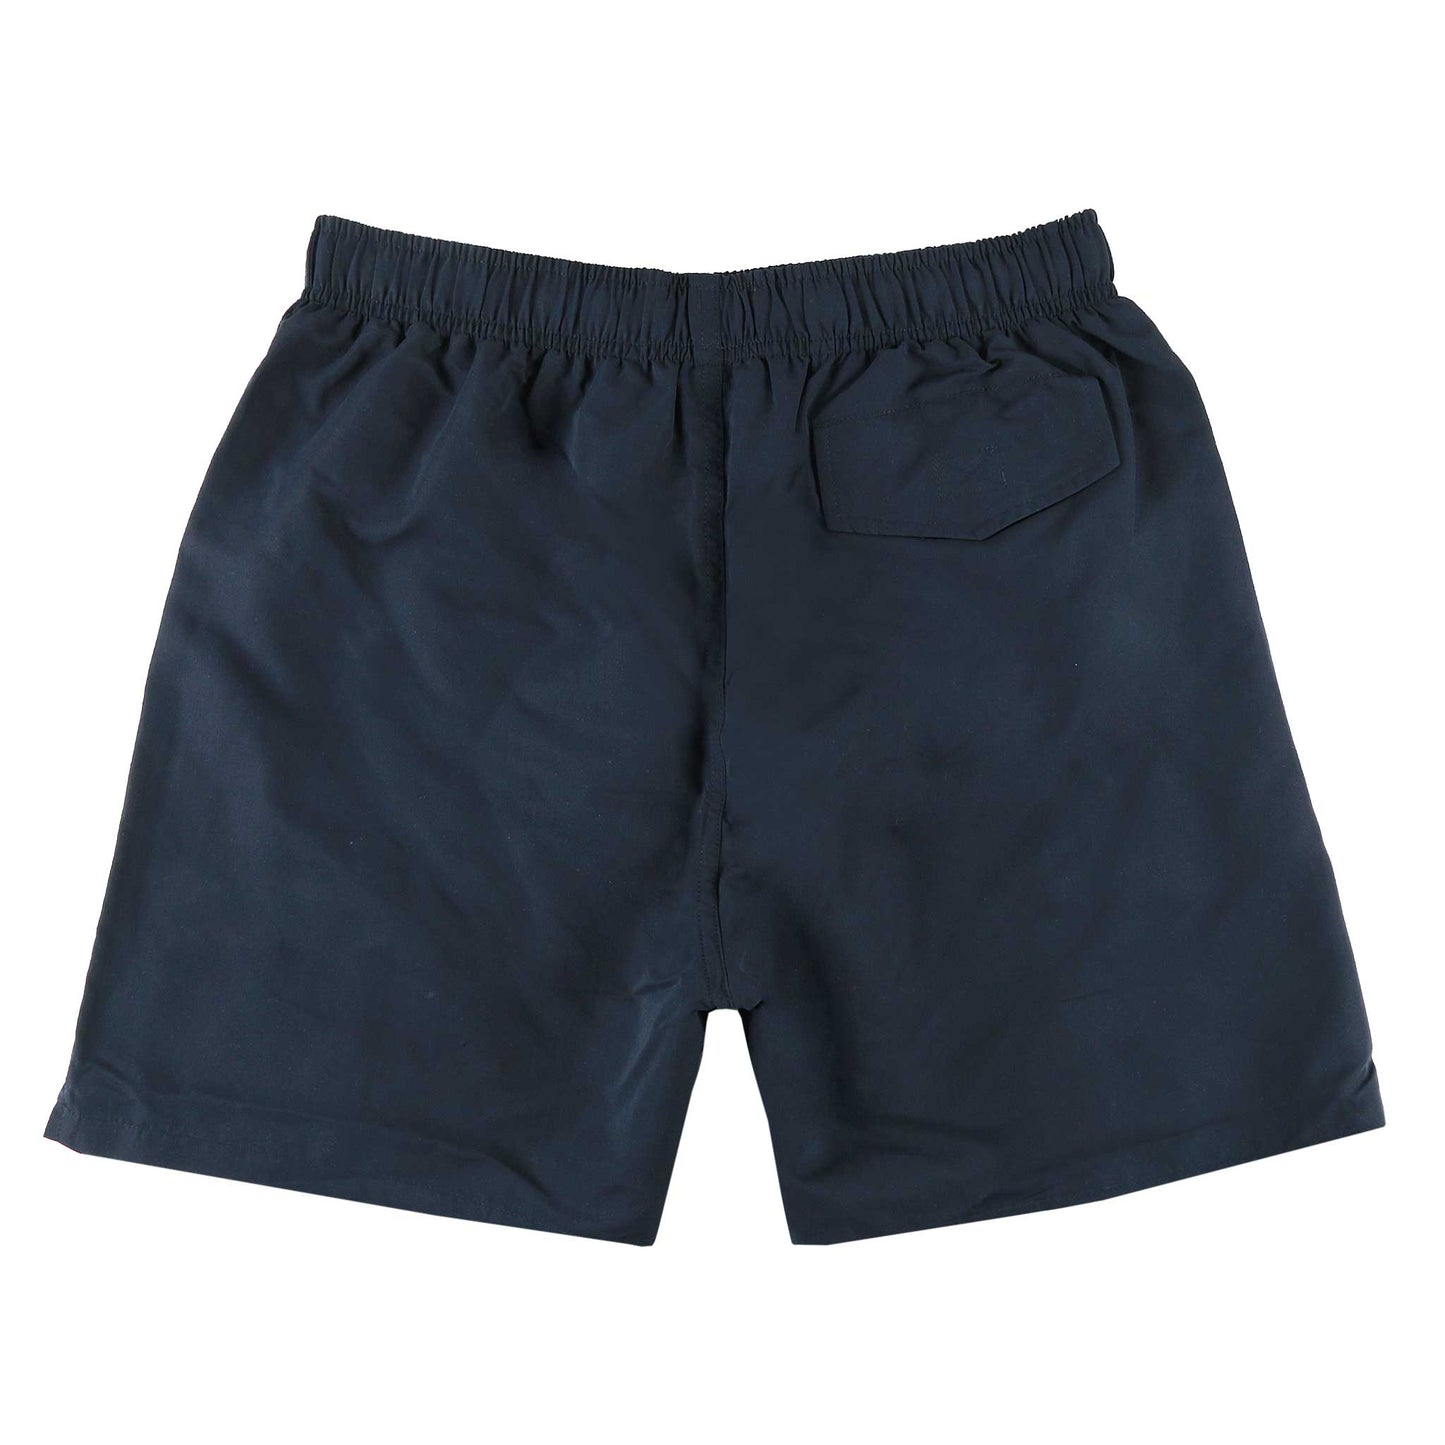 Navy Boys Swimsuit Shorts